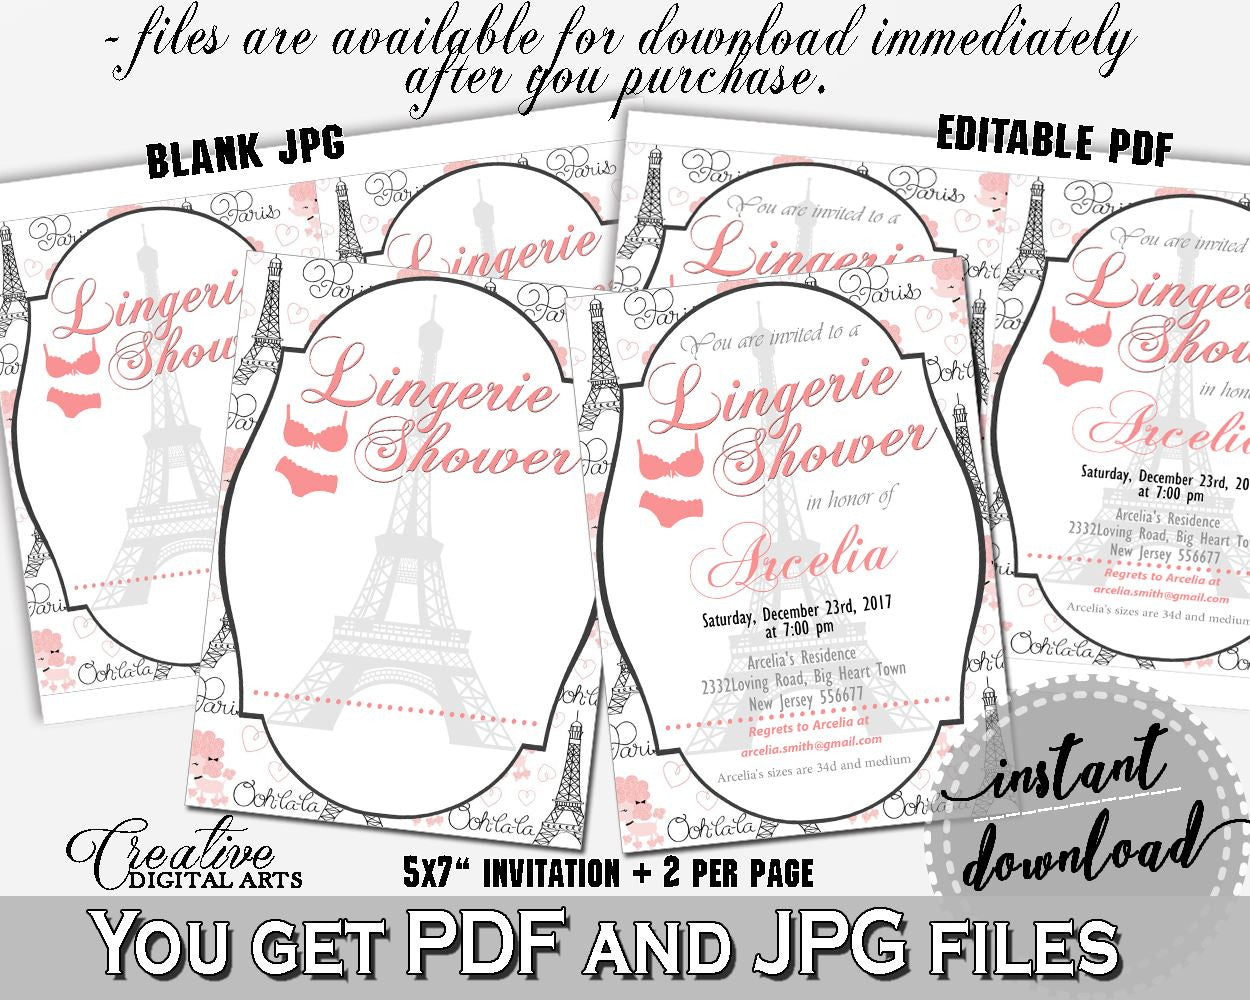 Paris Bridal Shower Lingerie Shower Invitation Editable in Pink And Gray, underwear invite, pariz bridal shower, party organization - NJAL9 - Digital Product